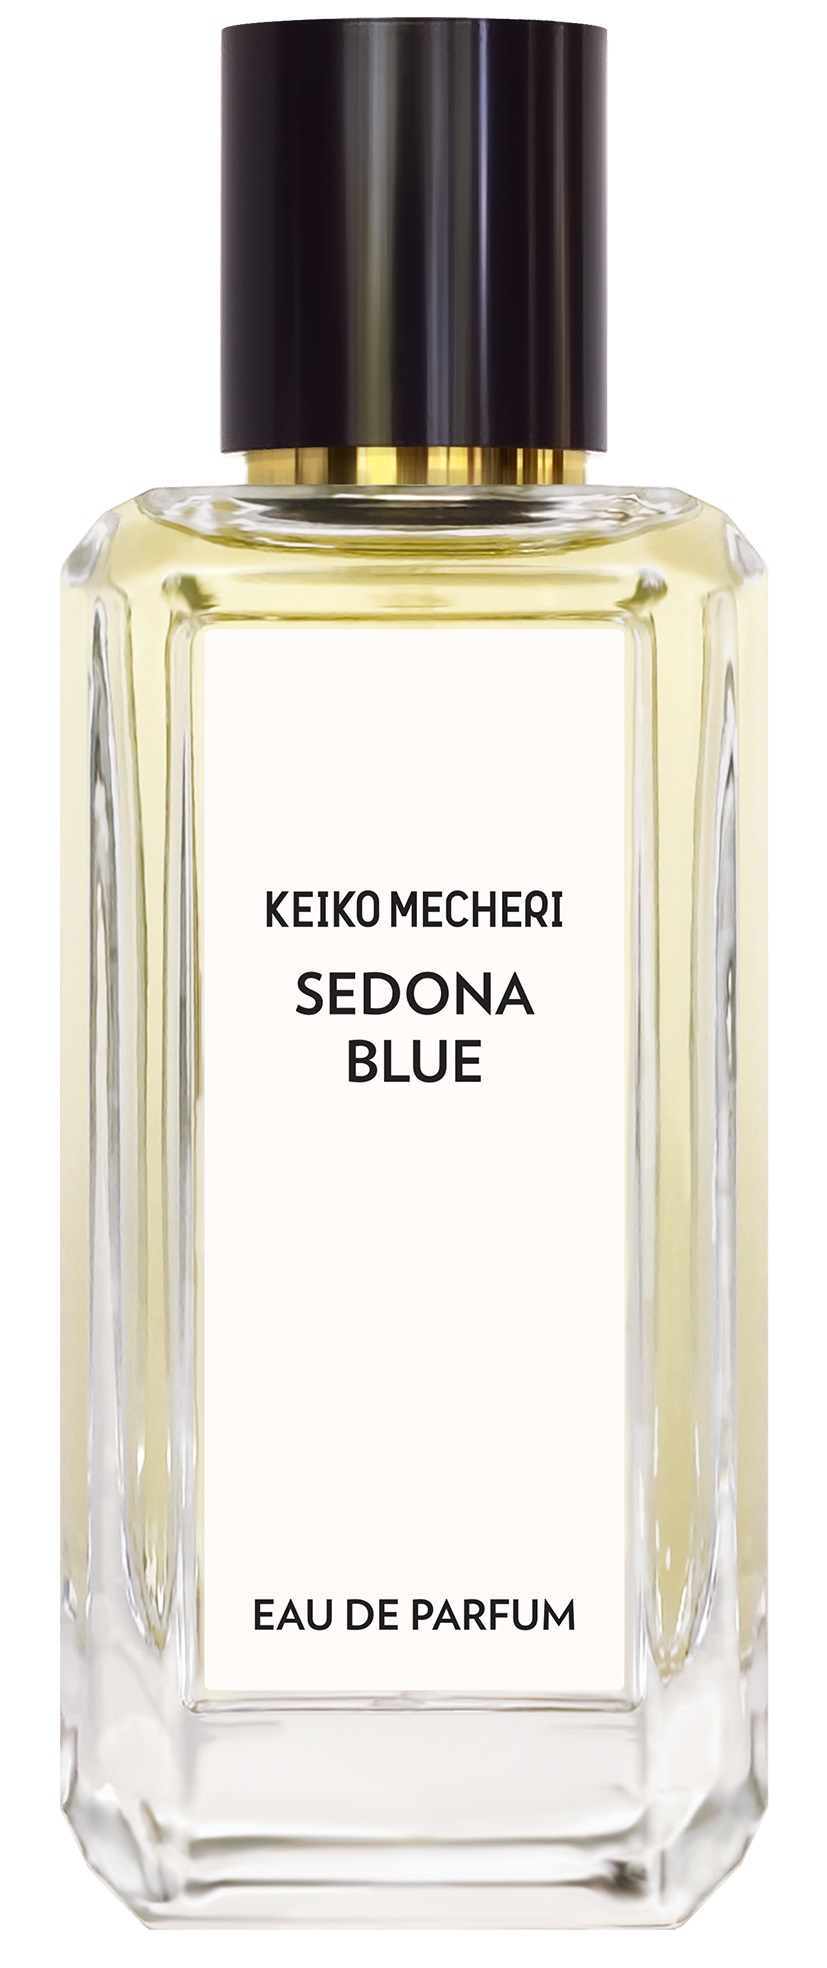 Keiko Mecheri Sedona blue edp 100 ml.